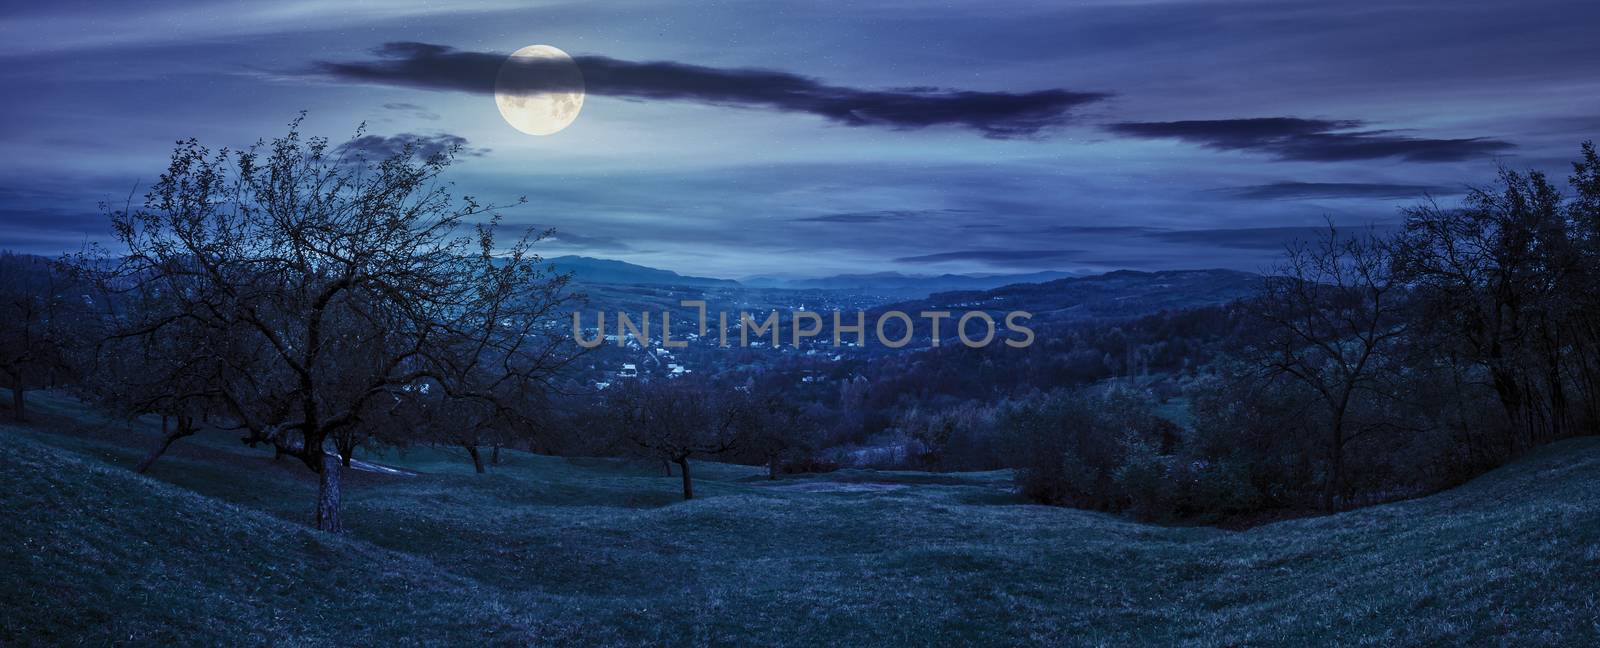 Green hillside of an apple orchard near the mountain village at night in full moon light